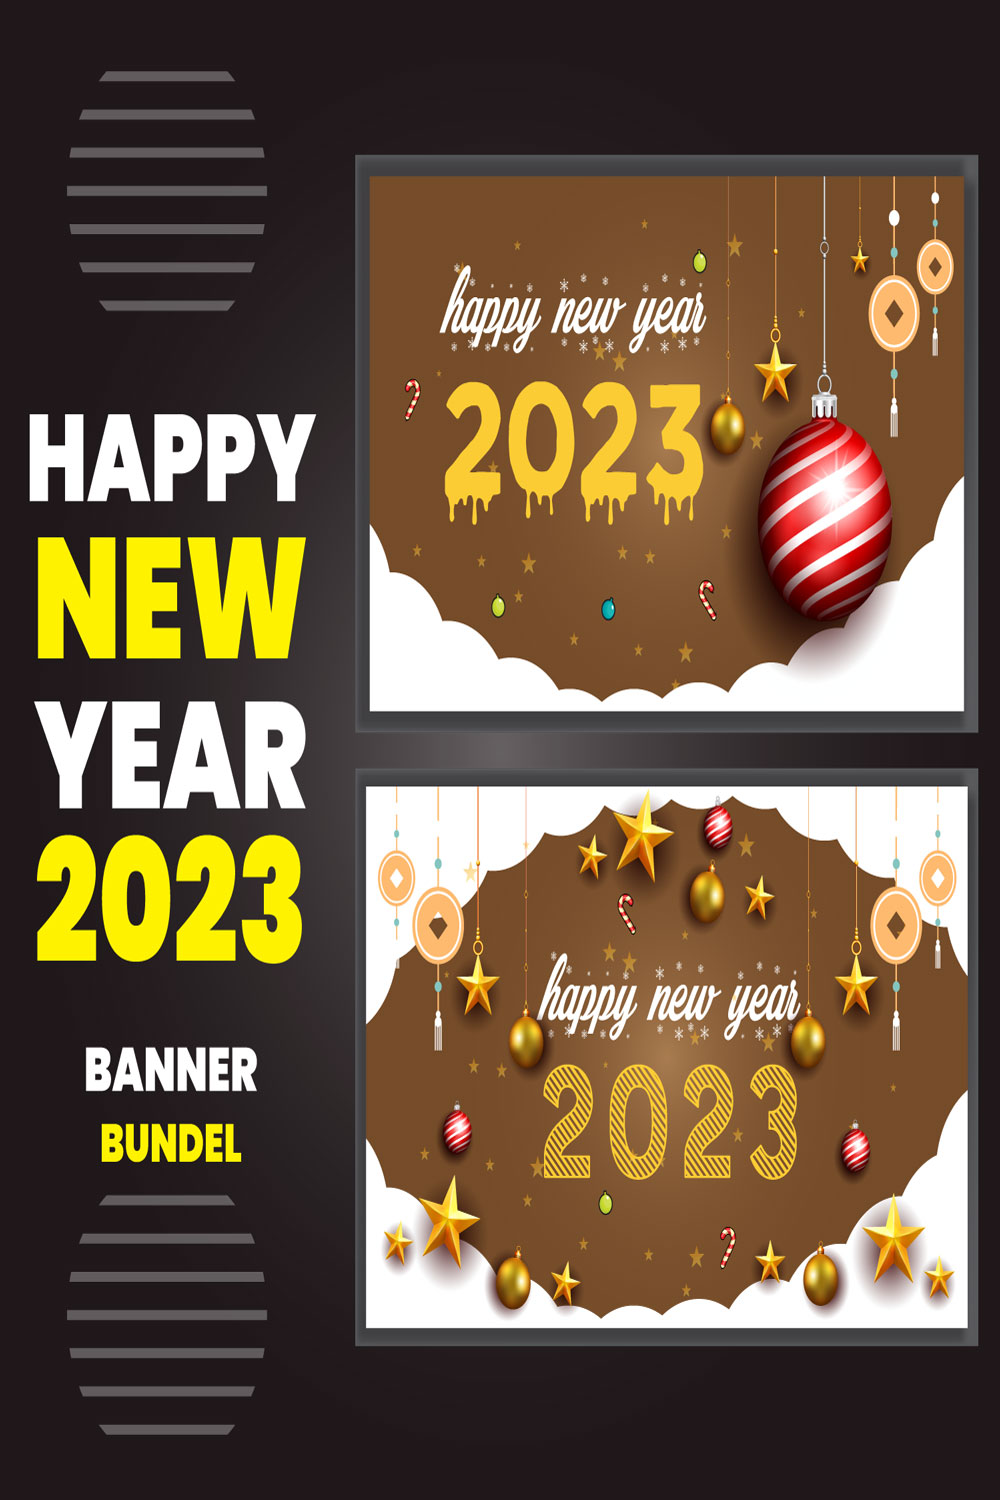 Happy New Year Banner Design pinterest image.